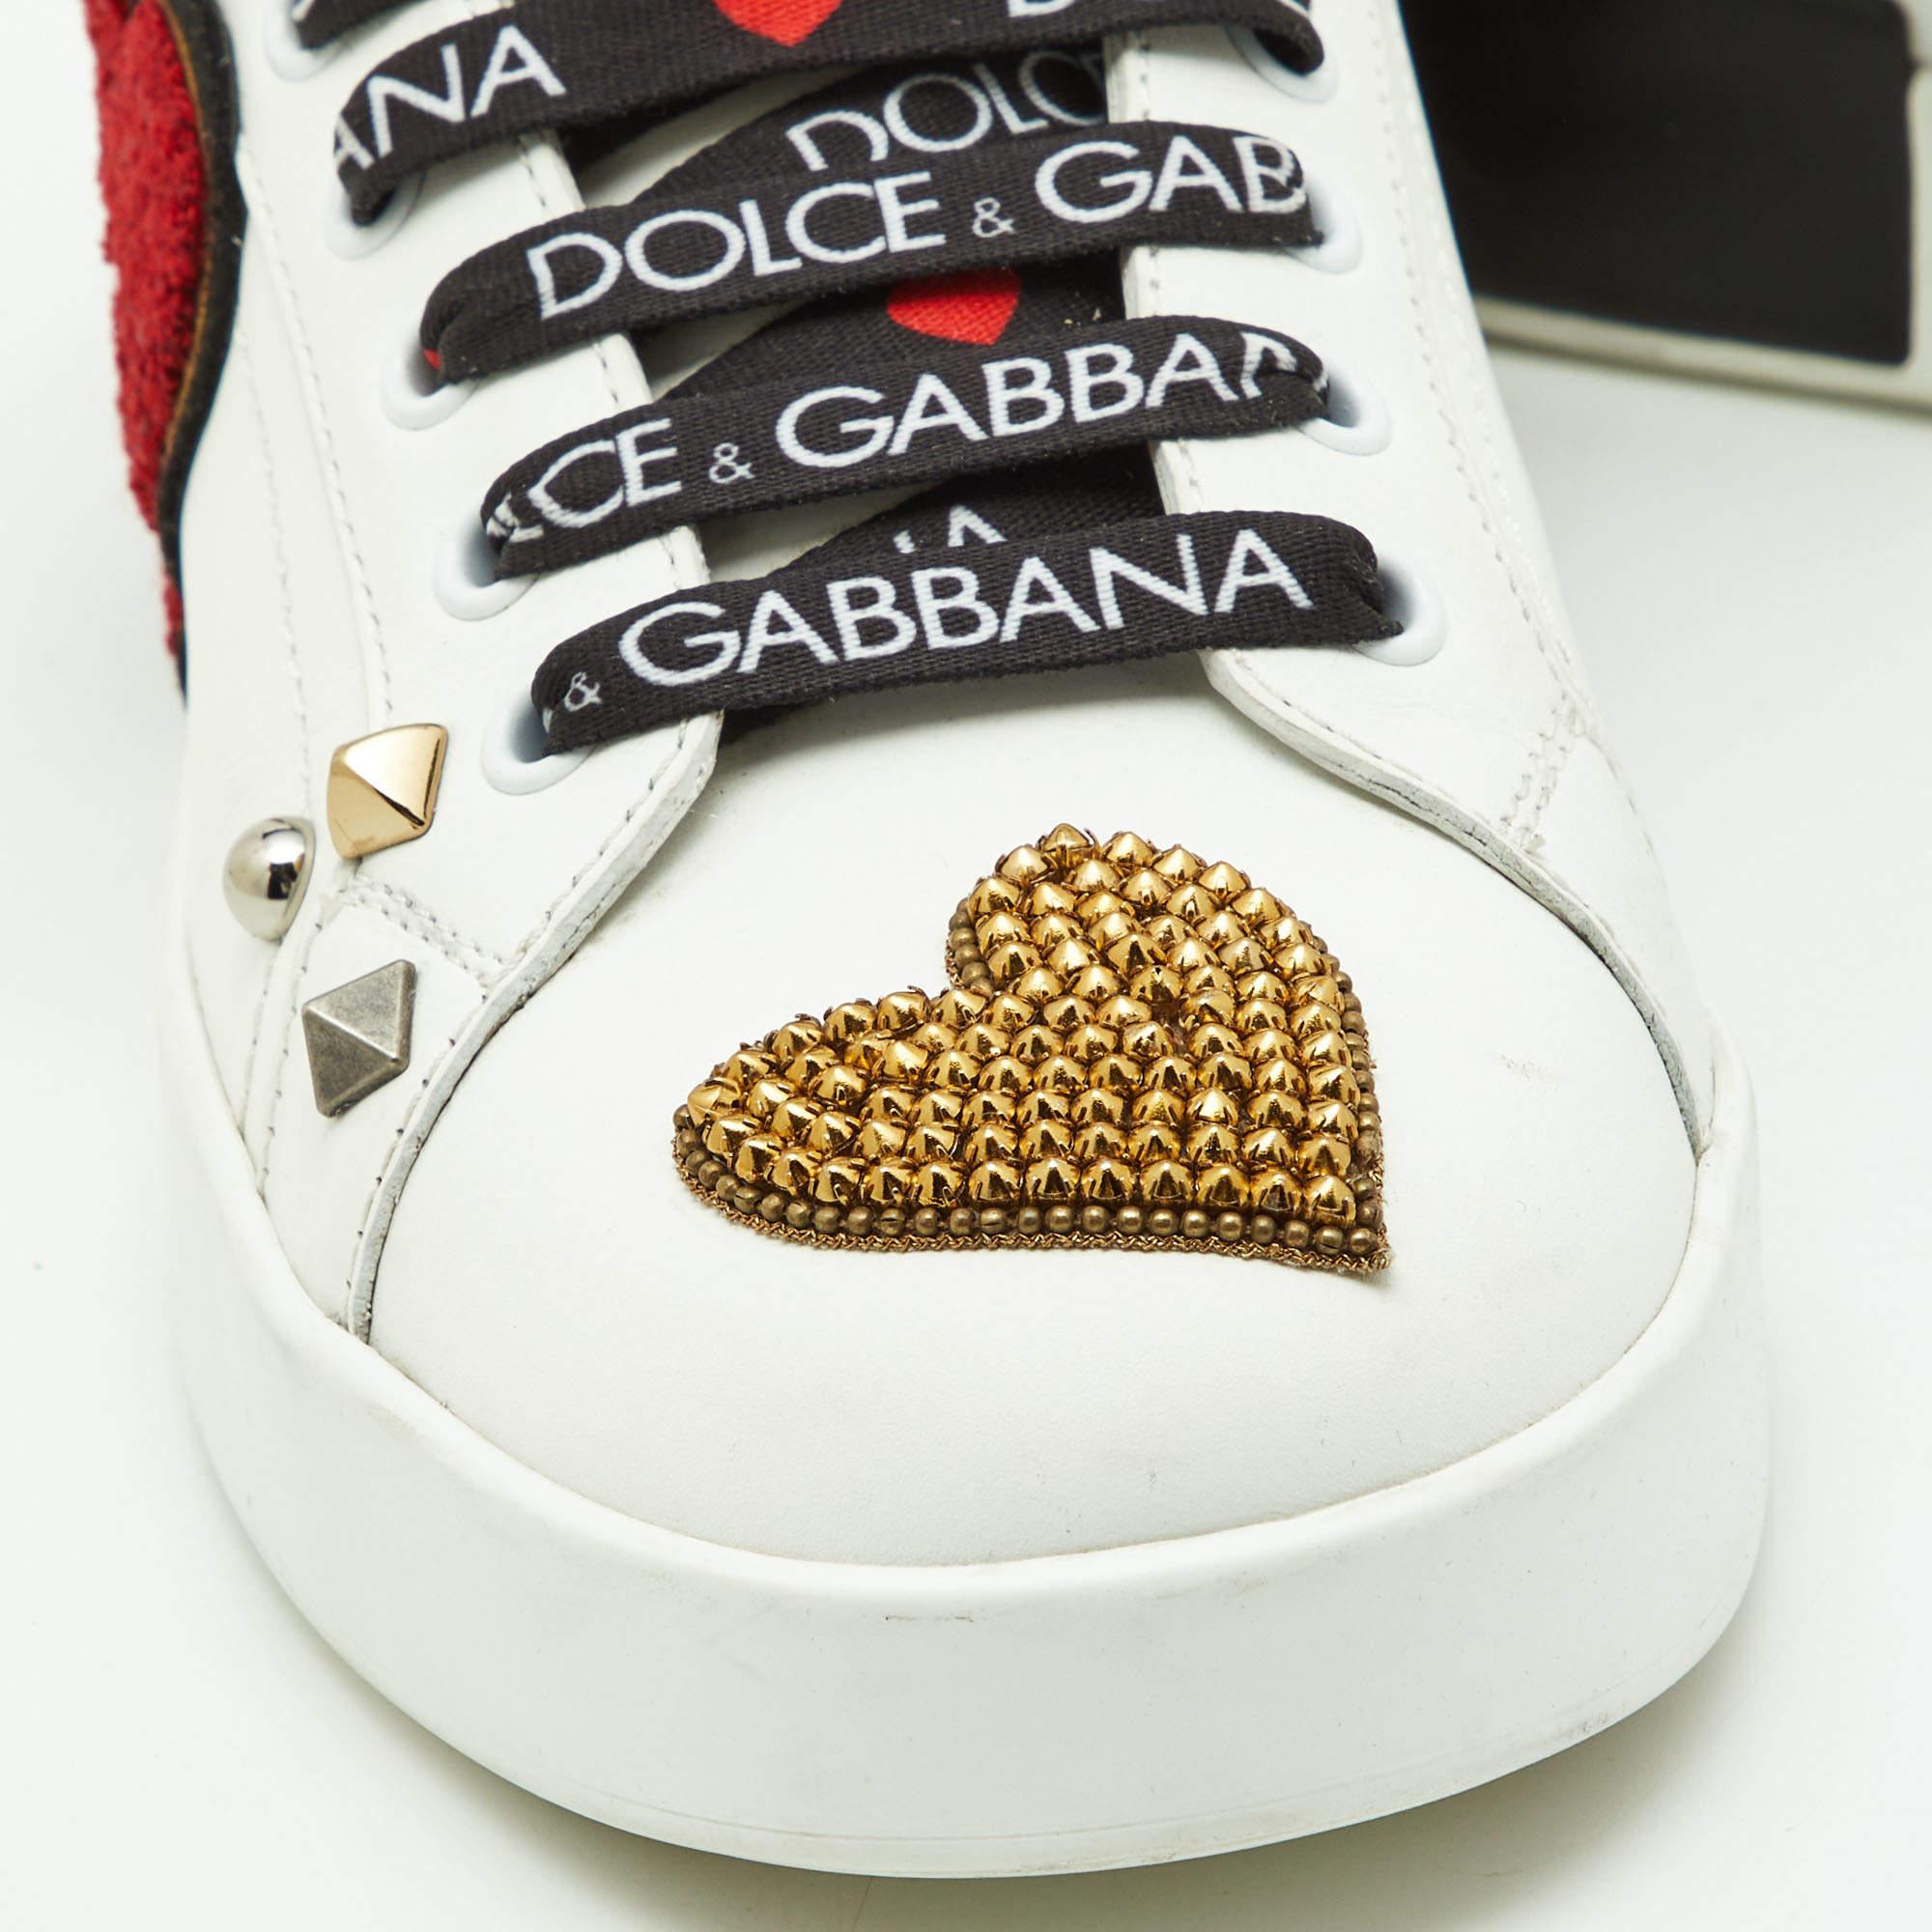 Dolce & Gabbana White Leather Portofino Heart Low Top Sneakers Size 39.5 4